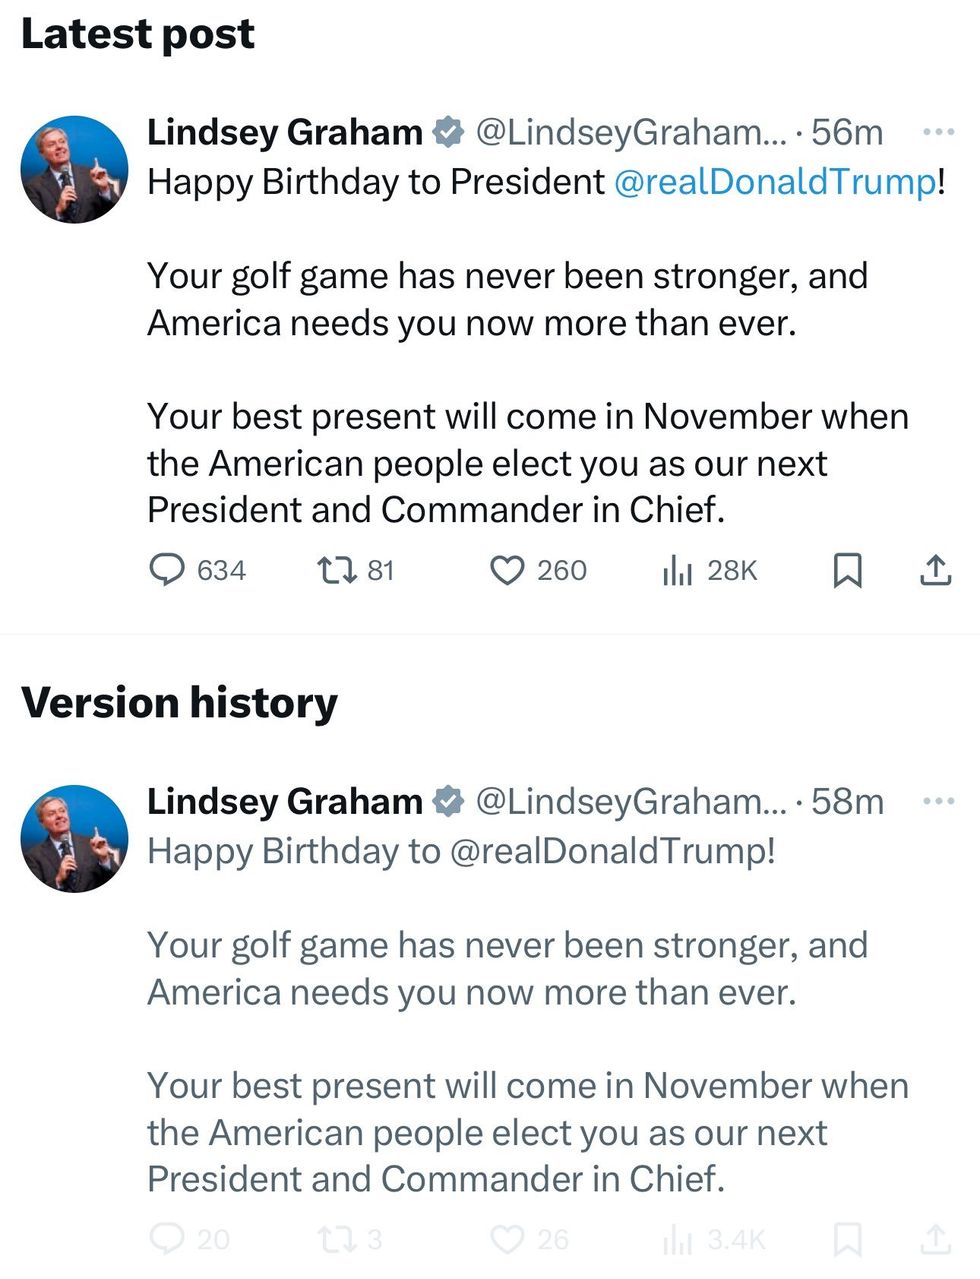 Screenshot of Lindsey Graham's edited post alongside original